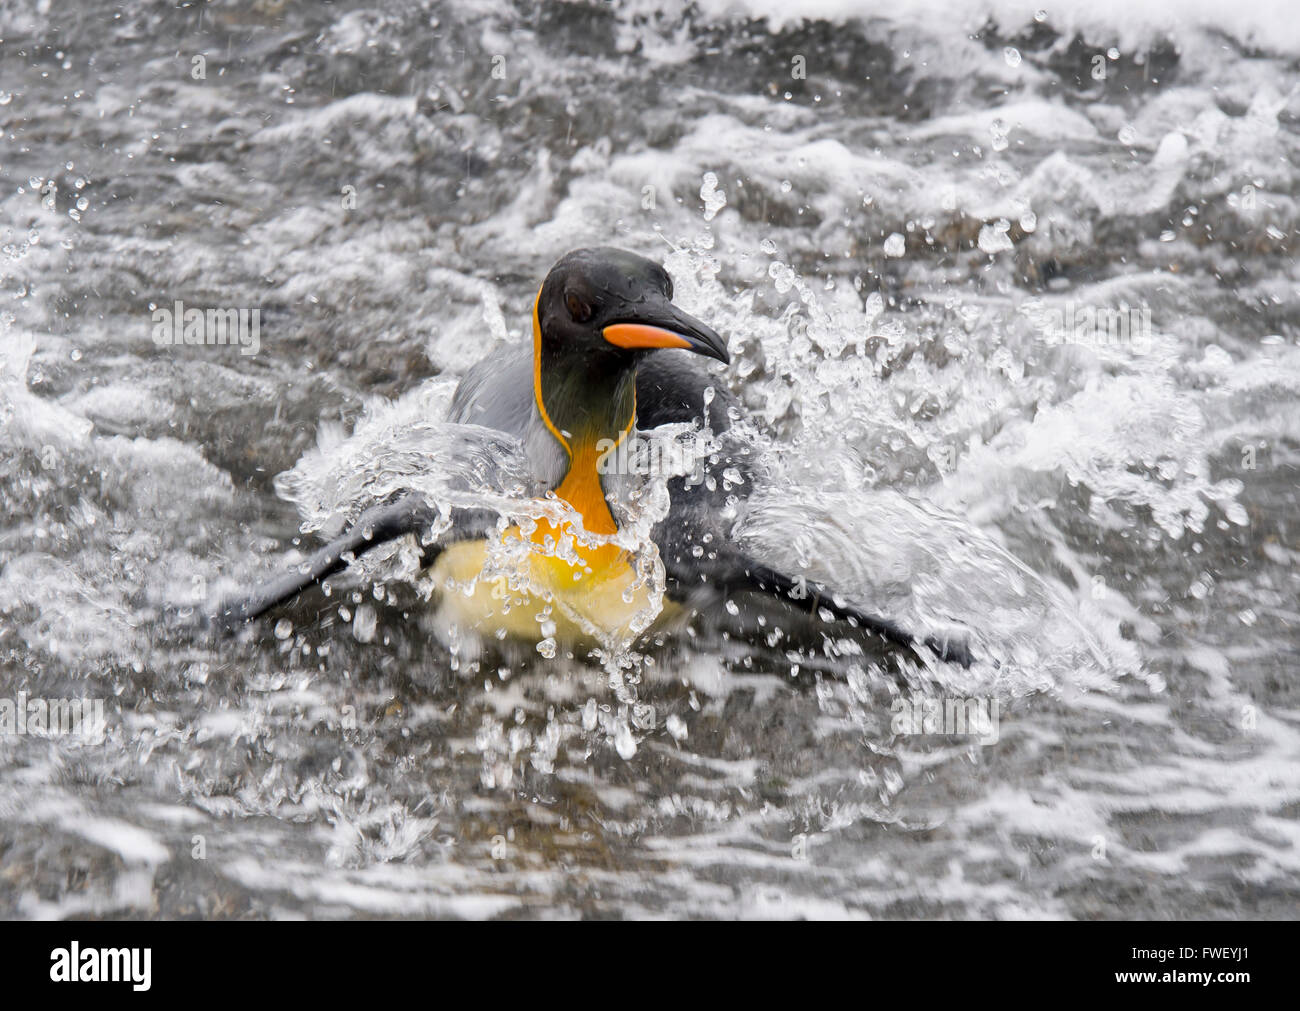 King Penguinin the water Stock Photo - Alamy